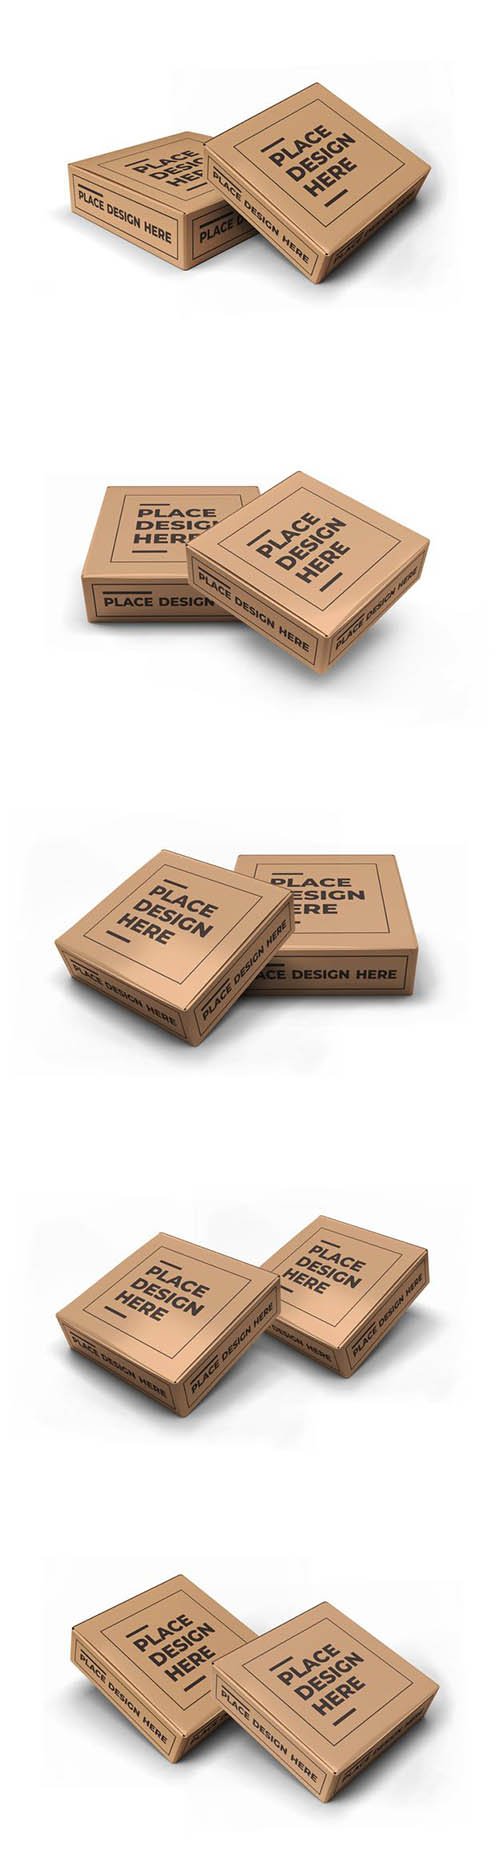 Small Square Box Packaging Mockup